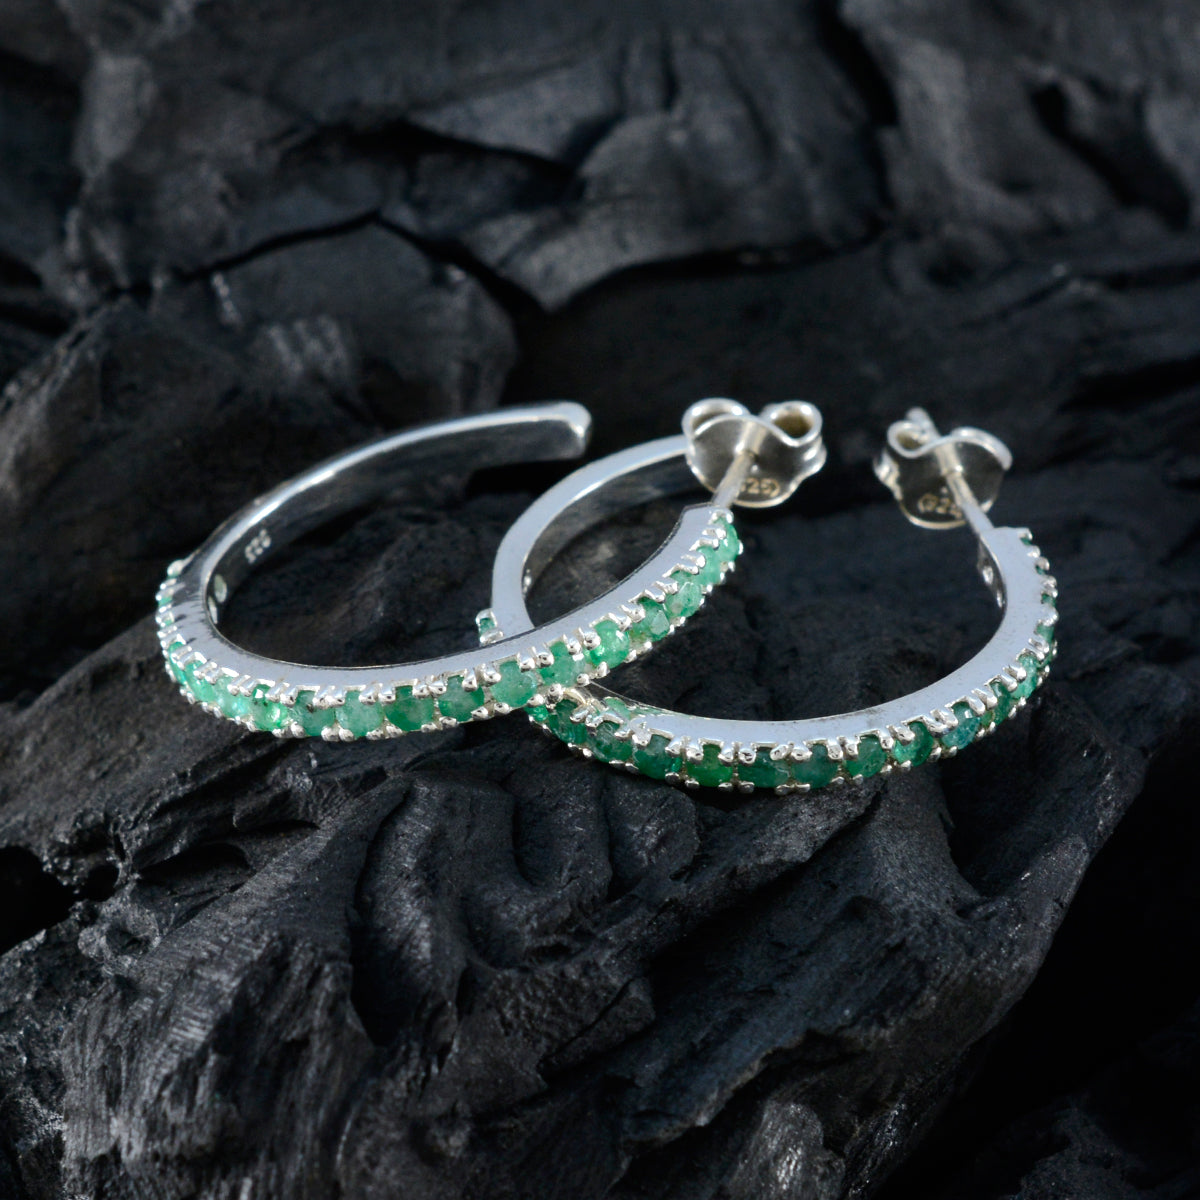 Riyo Alluring 925 Sterling Silver Earring For Sister Indian Emerald Earring Bezel Setting Green Earring Stud Earring